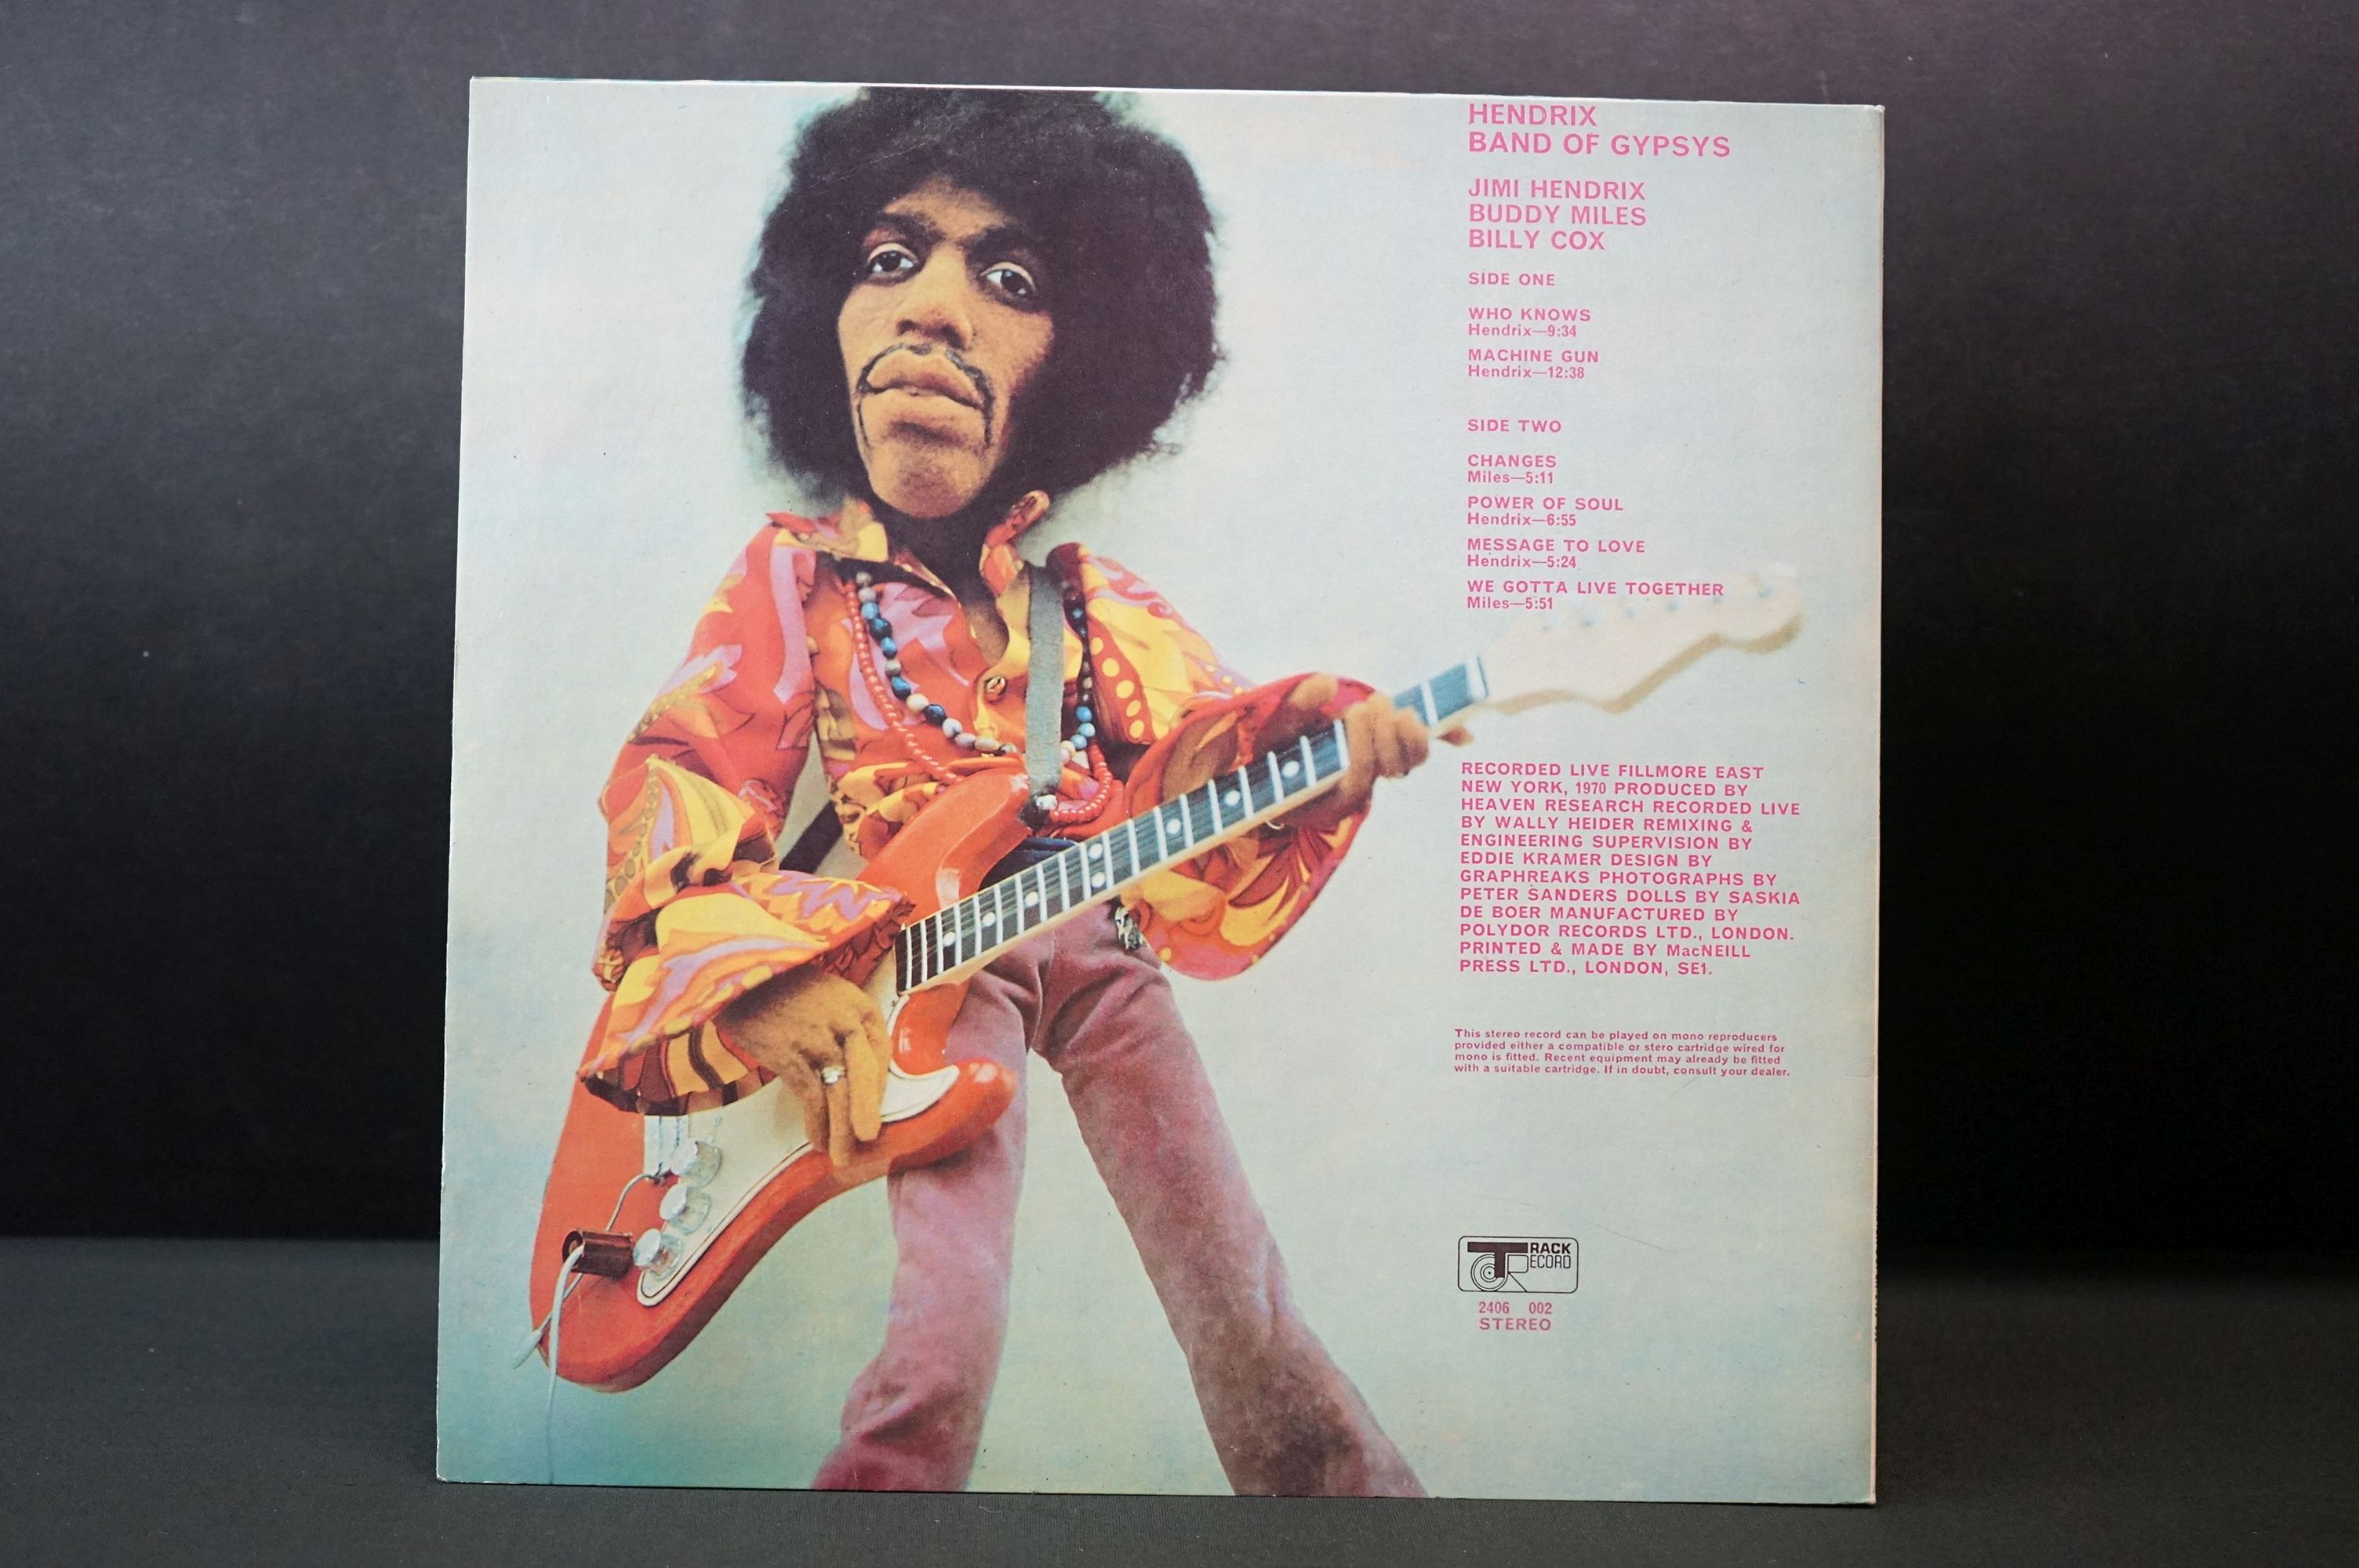 Vinyl - Jimi Hendrix Band Of Gypsys on Track 2406 002 'puppet' sleeve. Vg+ - Image 6 of 6